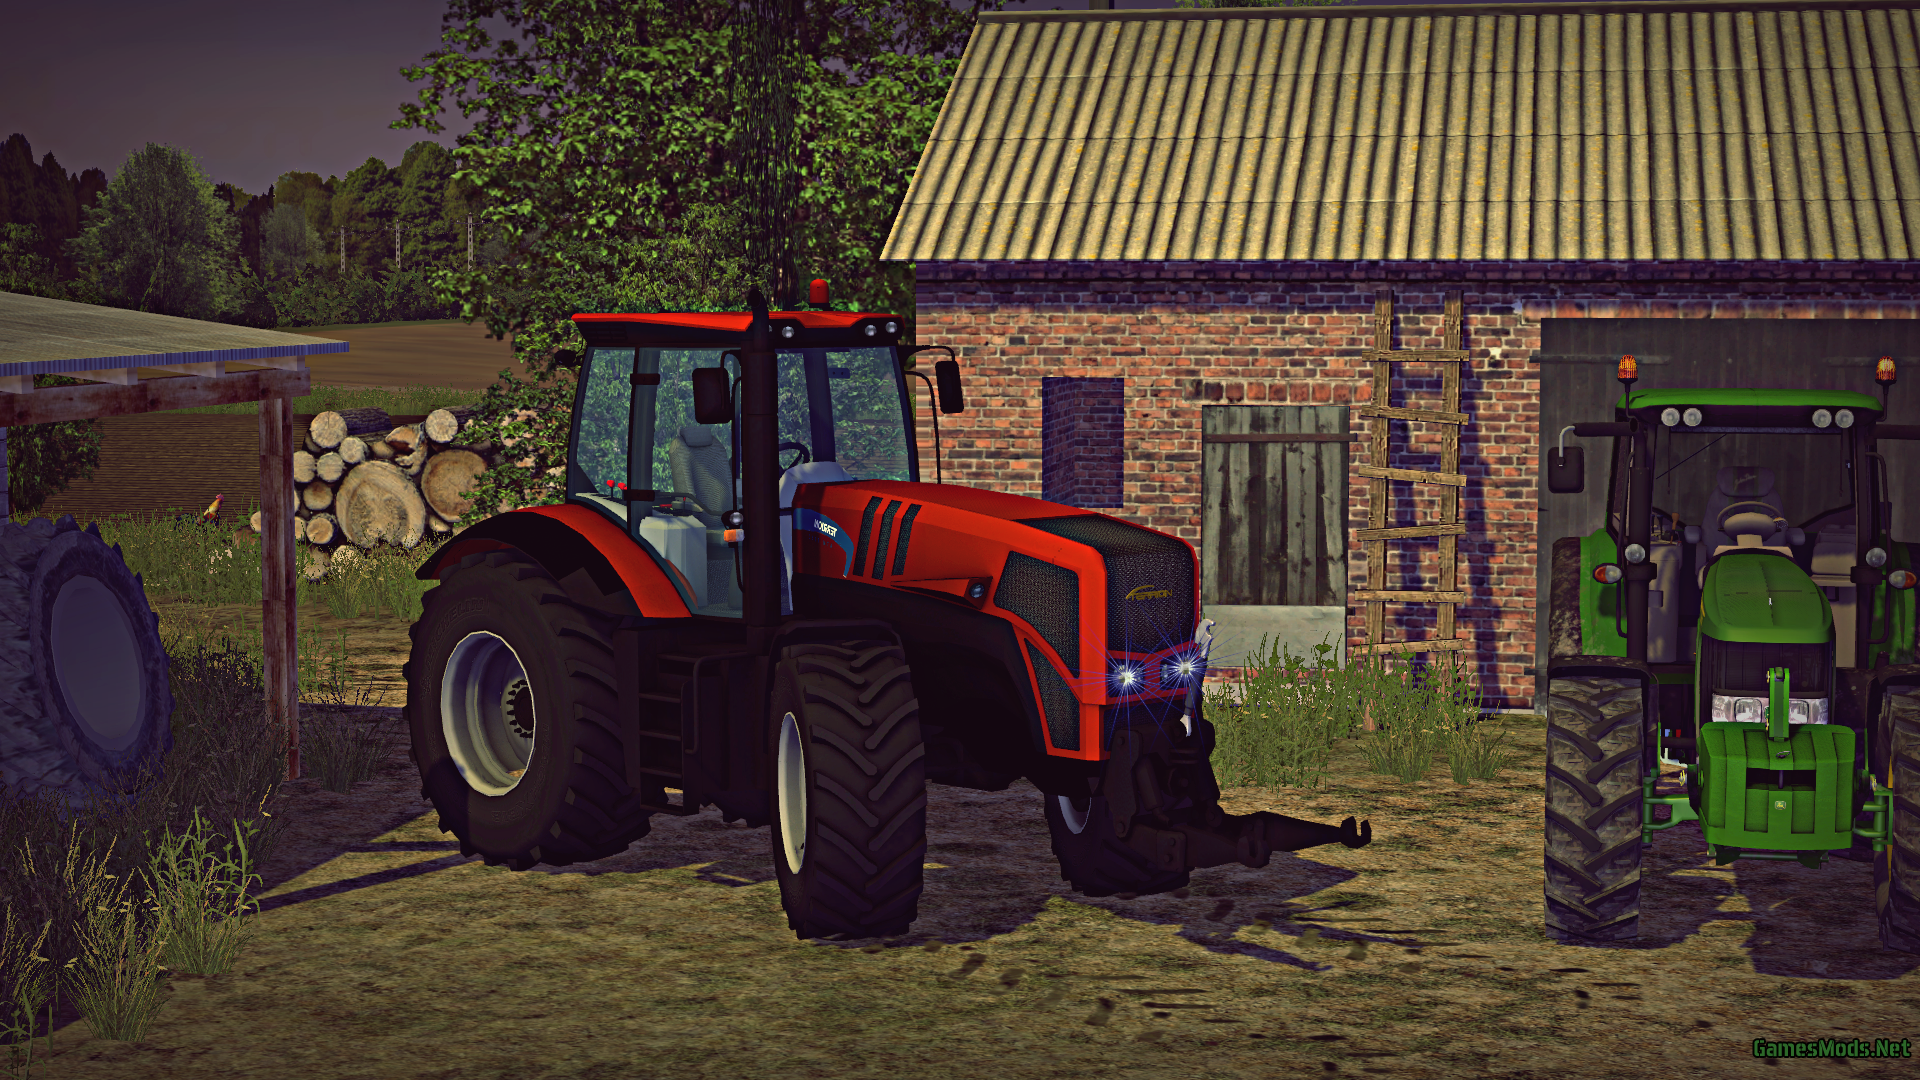 Трактор Террион 3180. Террион атм-7360 Farming Simulator 17. ATM 7360. Мод в ФС 17 на Терион трактор 5280.